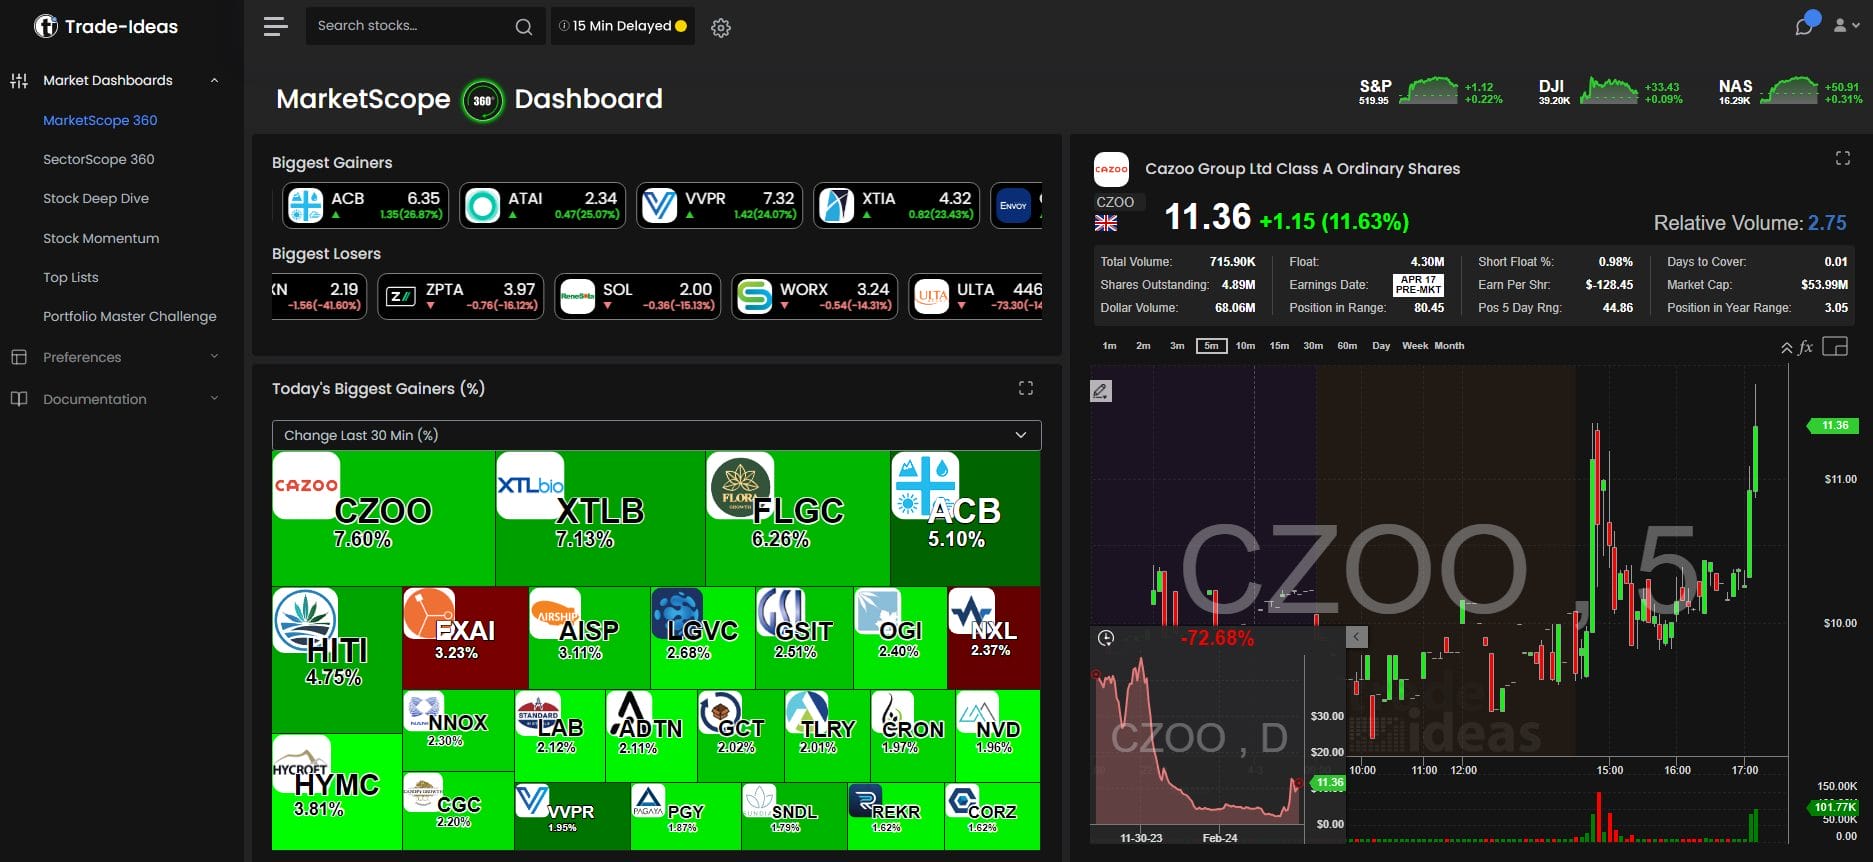 A screenshot of the Trade Ideas marketscope dashboard